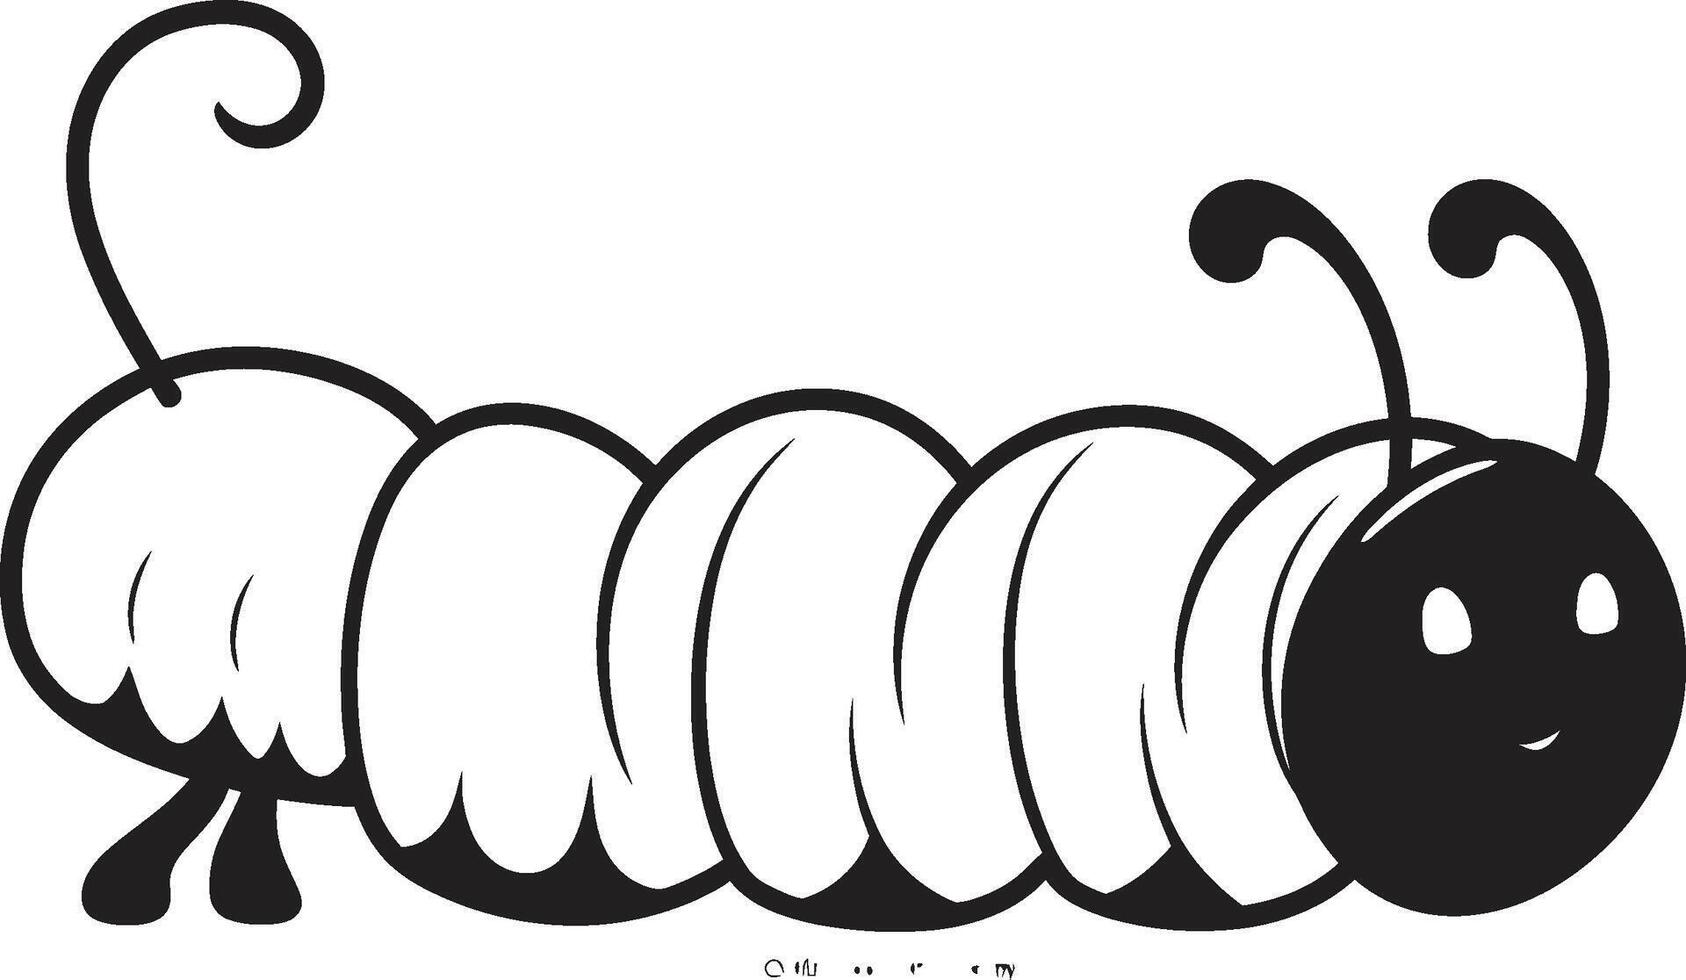 strisciante elegante elegante vettore logo design per elegante bruco bruco couture monocromatico icona nel nature Evoluzione